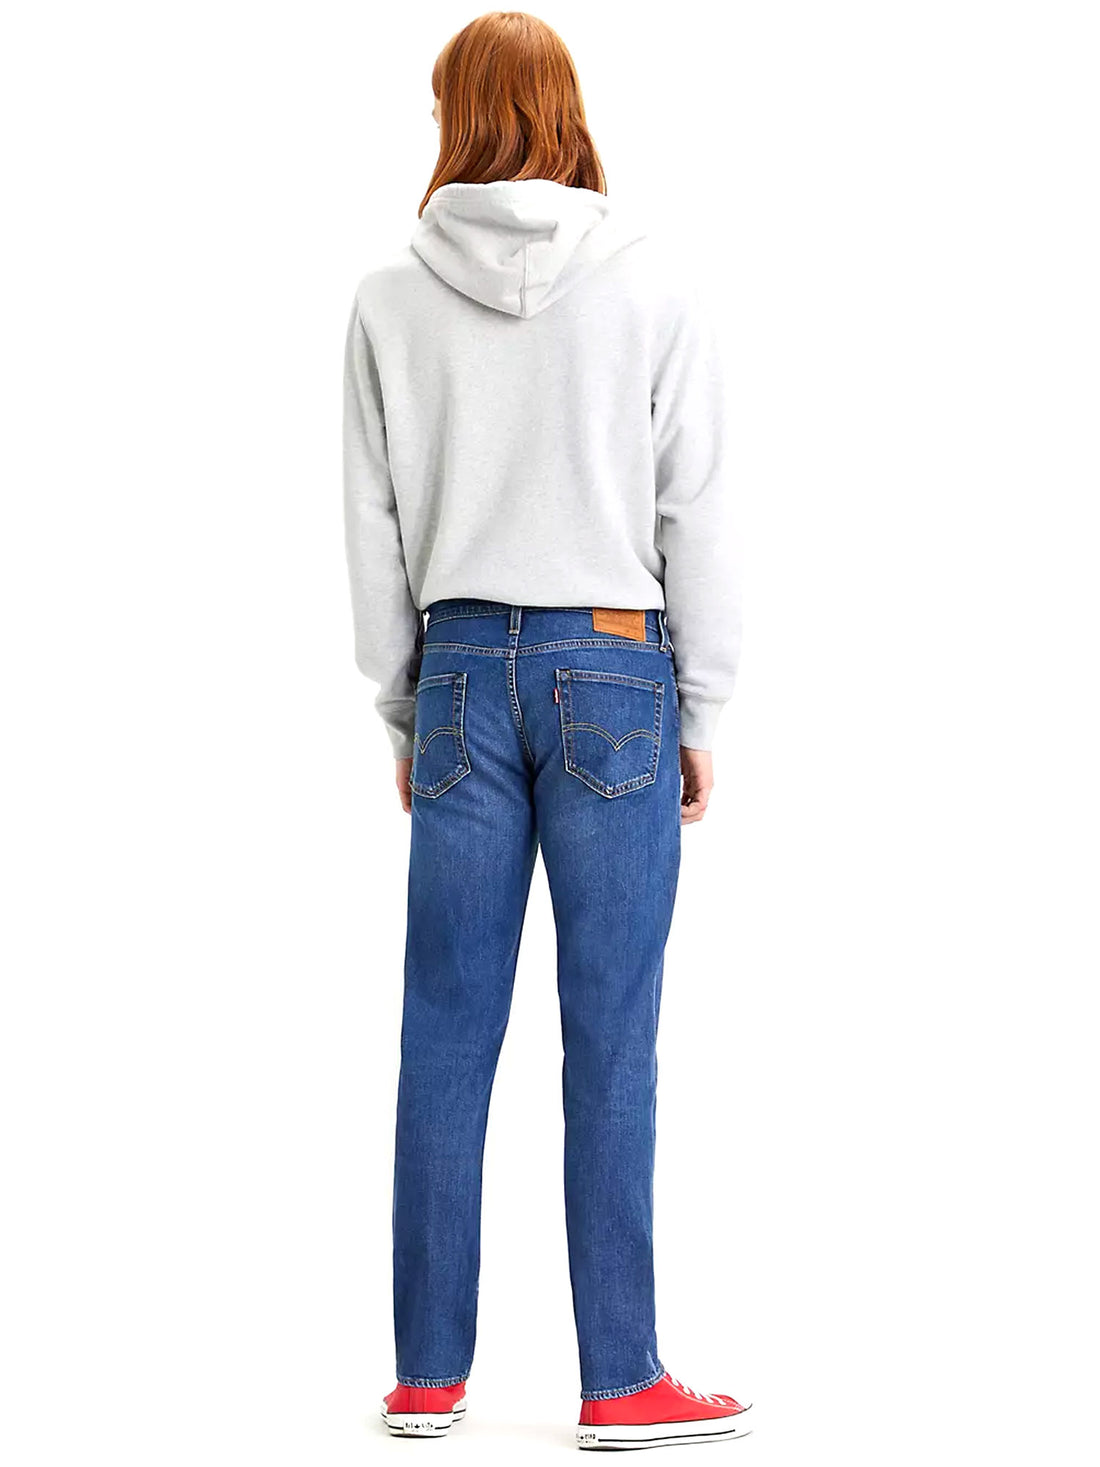 Jeans Blu Scuro Levi's